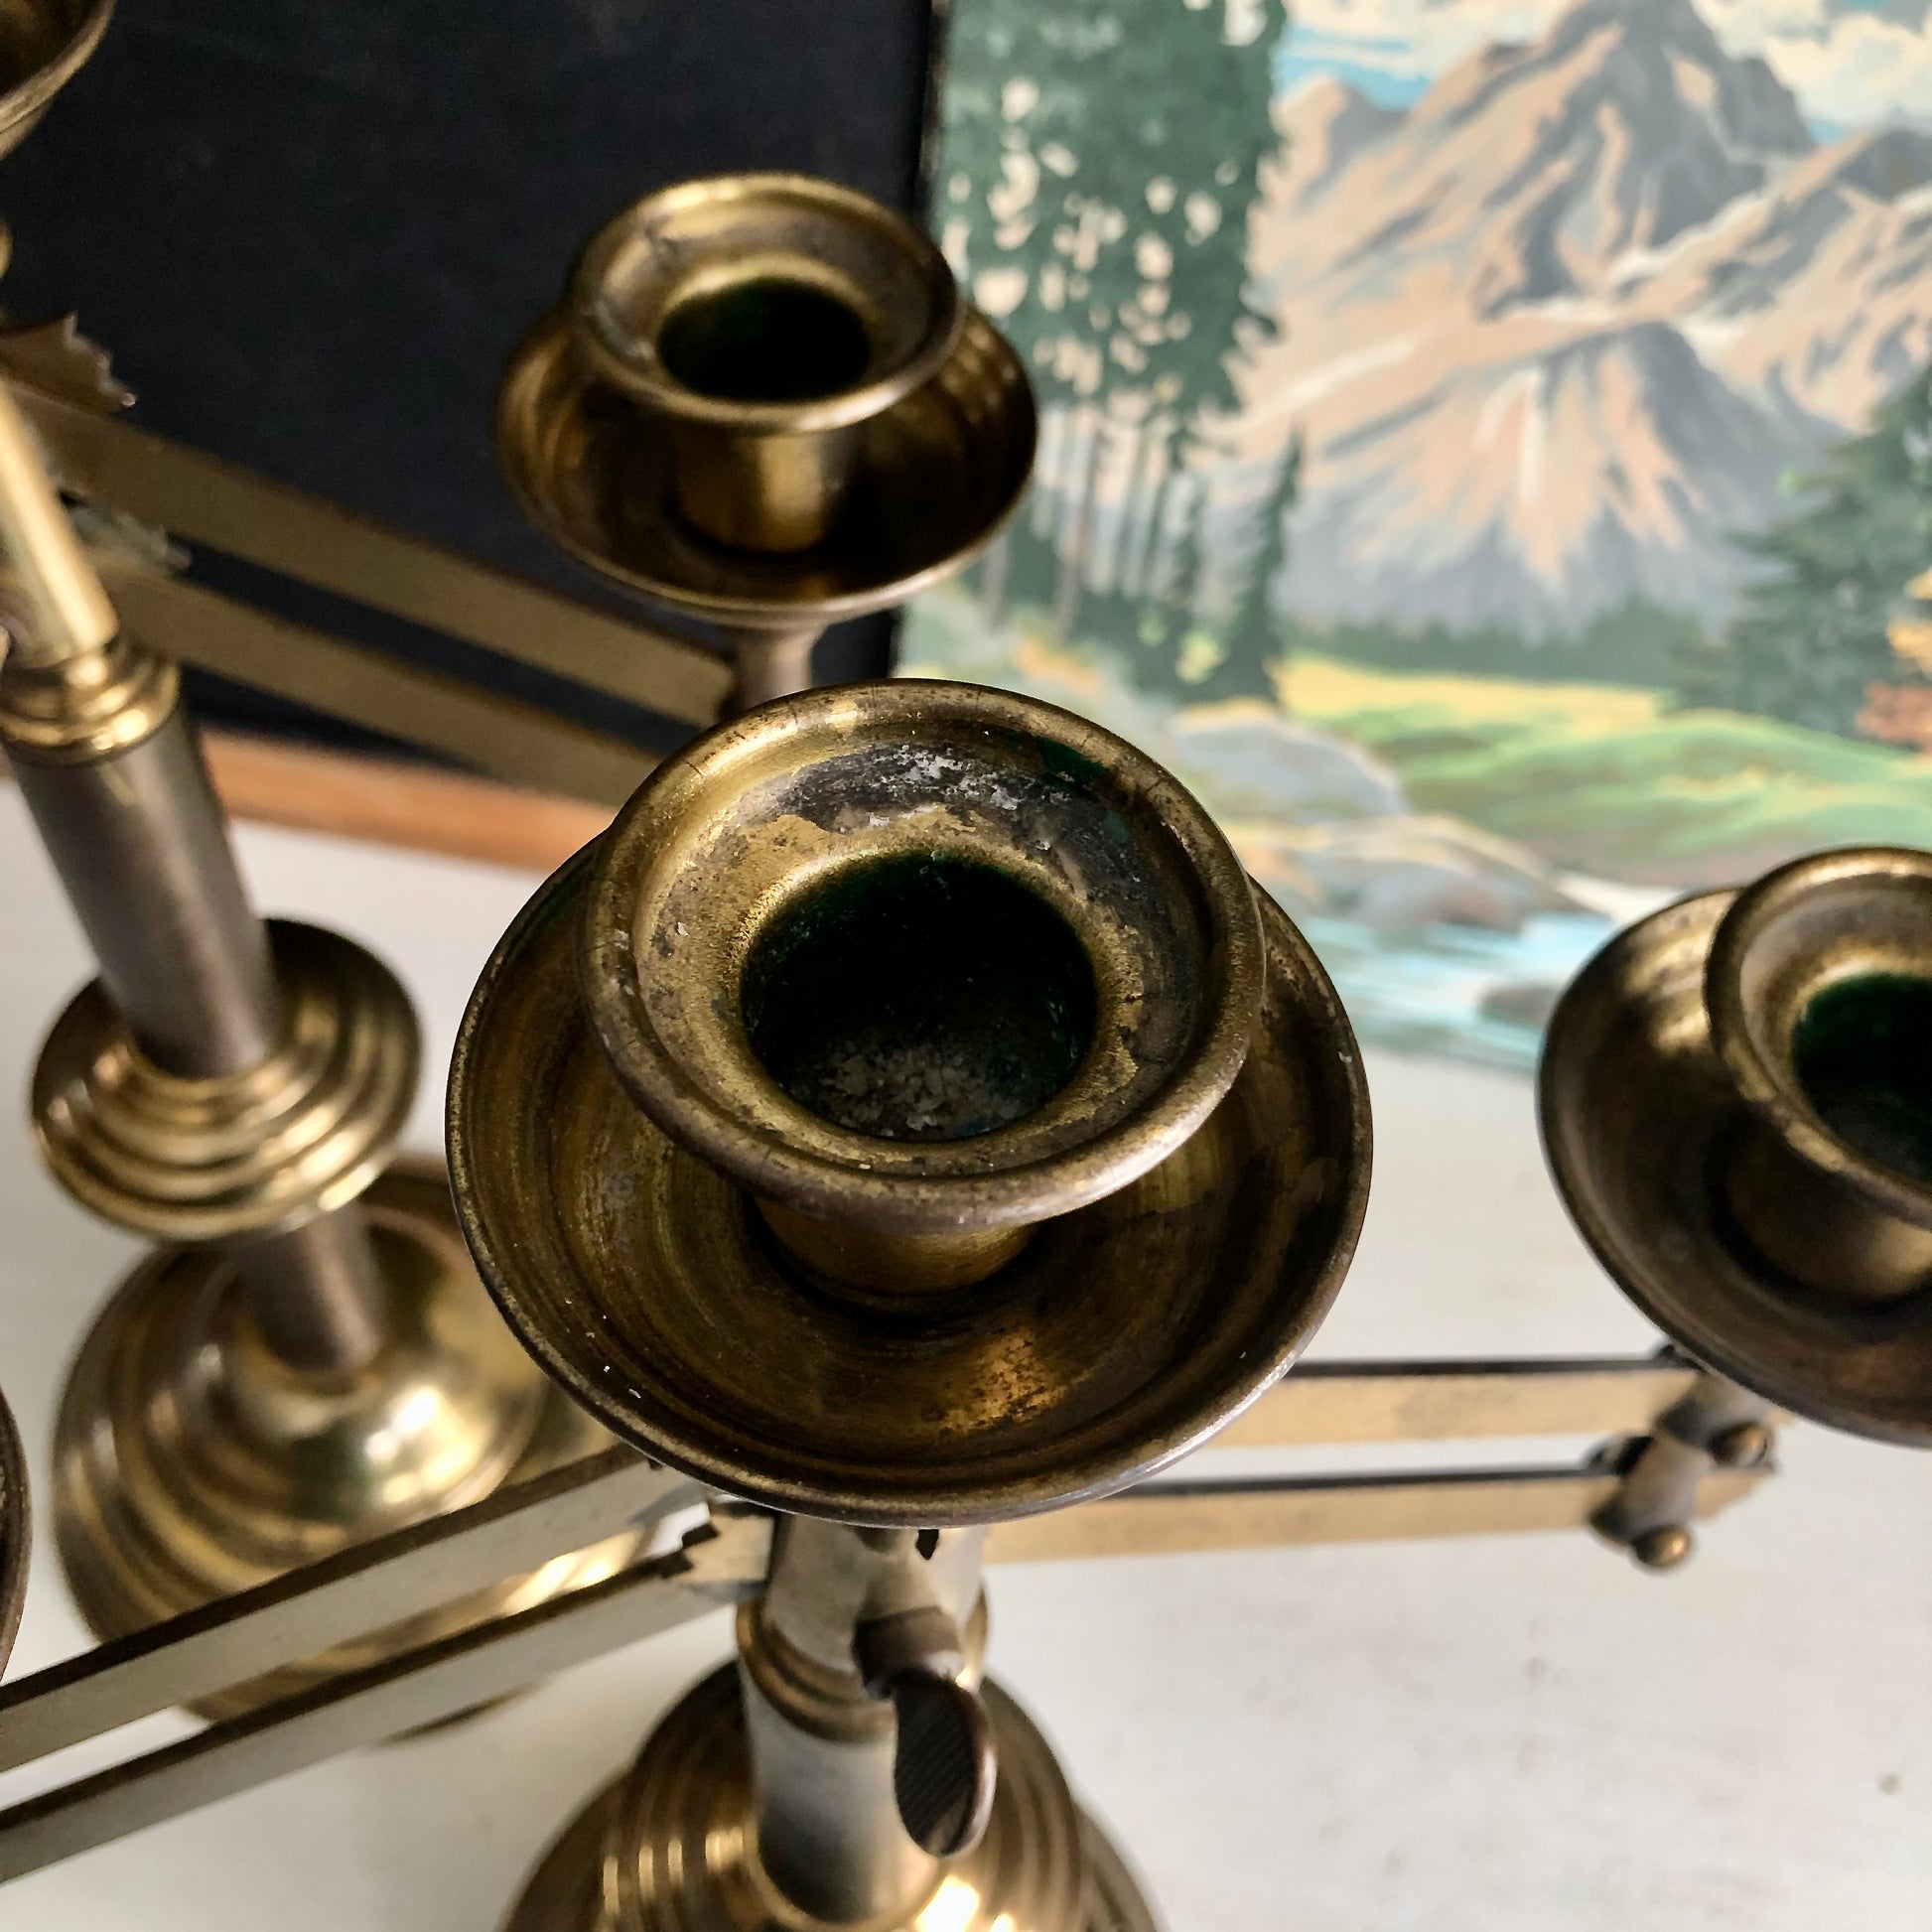 Vintage Adjustable Three-Light Brass Candelabras, Set of 2